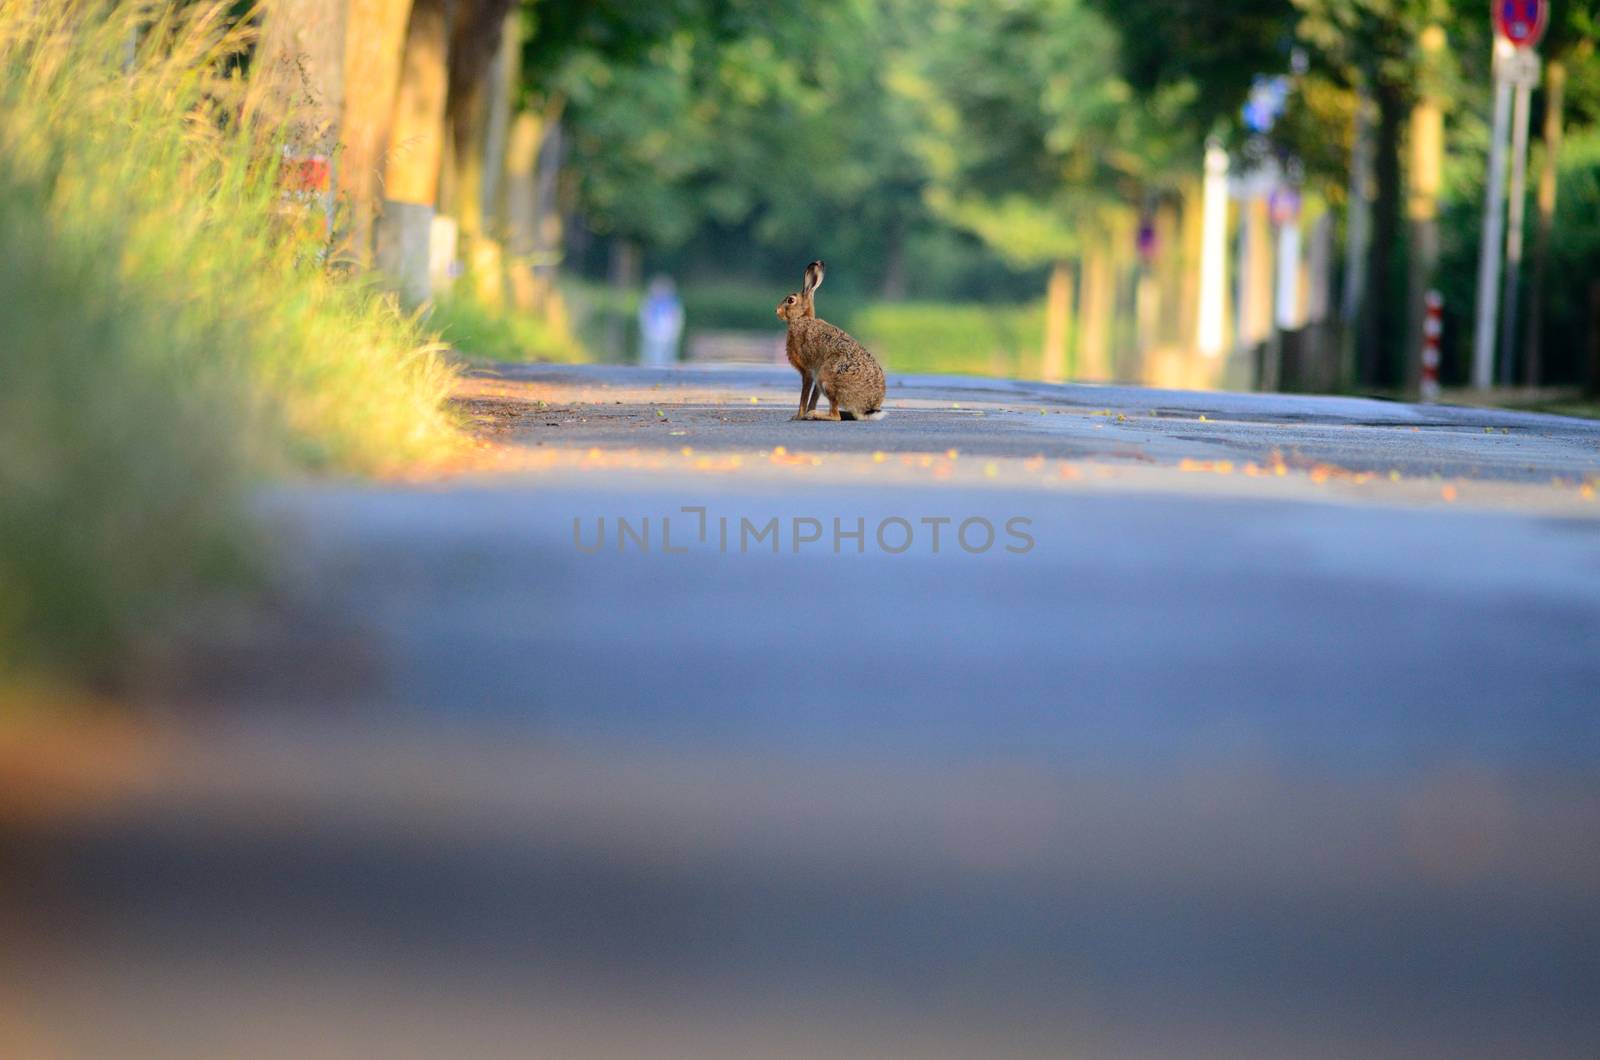 Hare, rabbit by ozkanzozmen